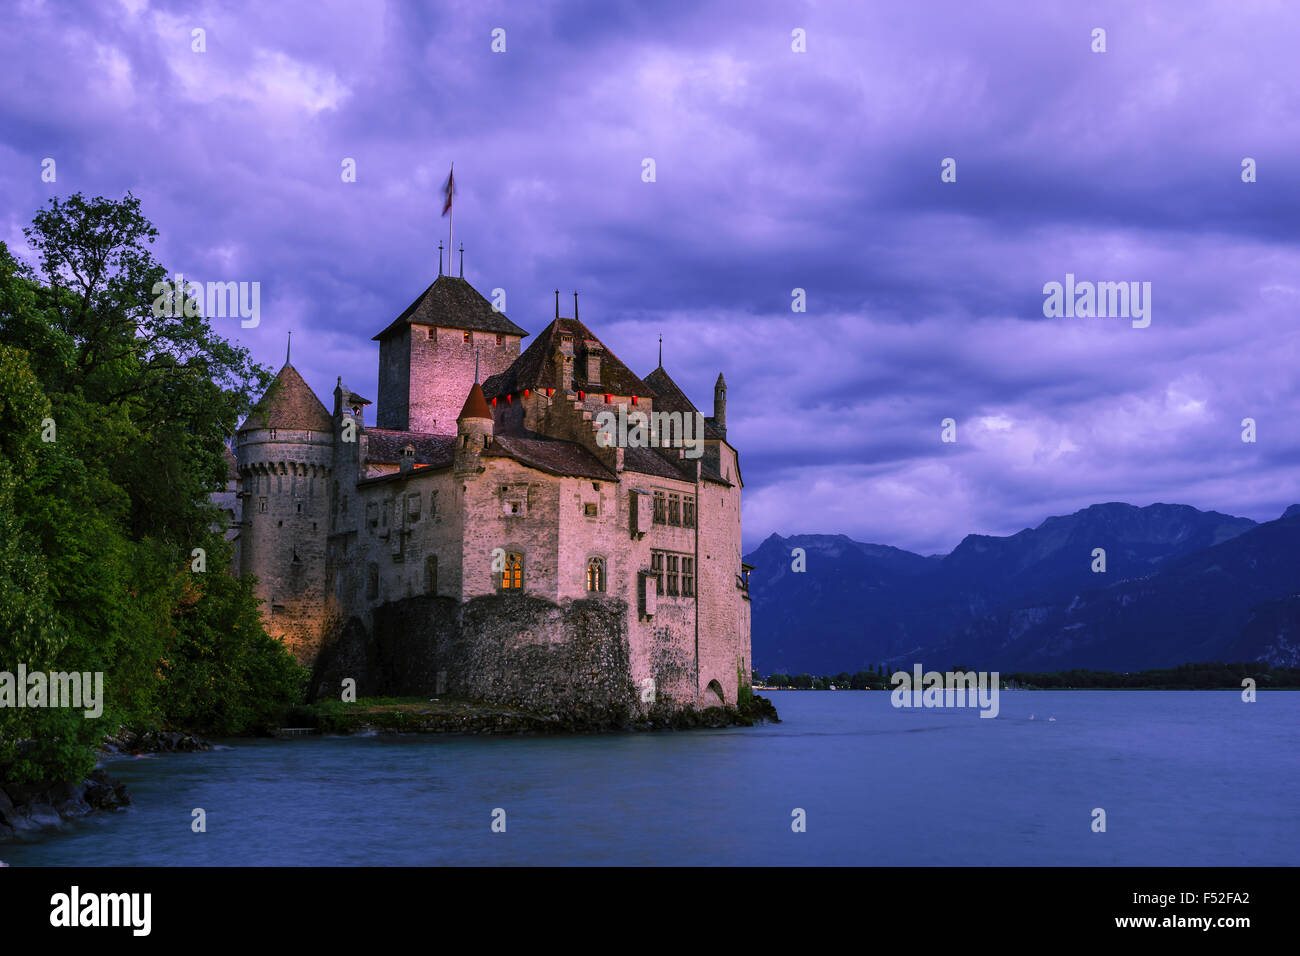 The Chateau de Chillon at twilight. Lake Geneva, Switzerland. Stock Photo